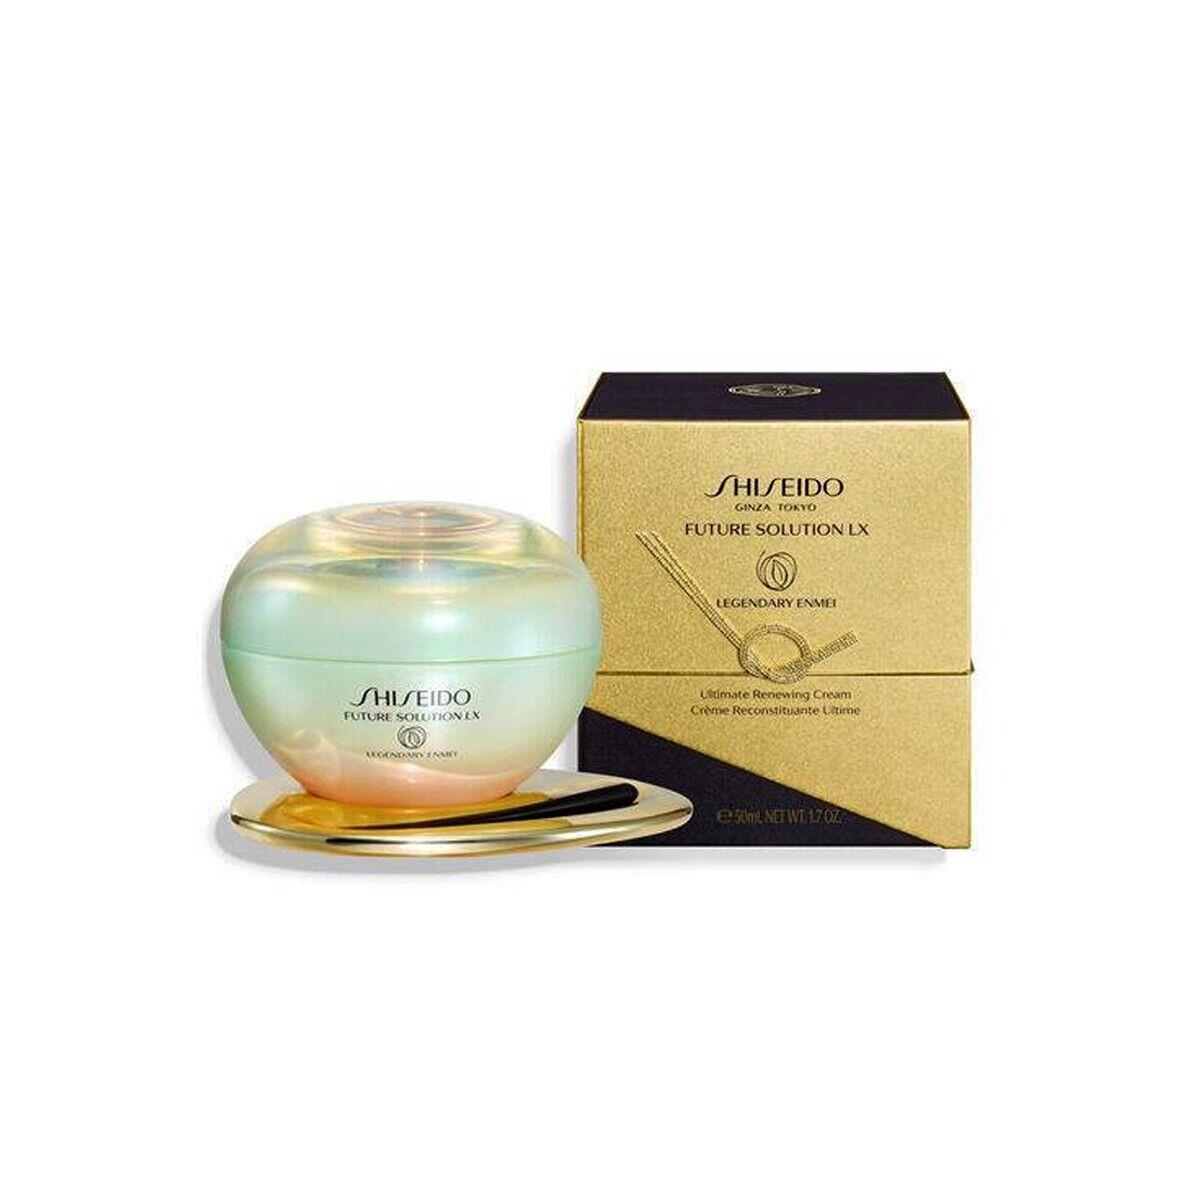 Shiseido Future Solution LX Legendary Enmei Ultimate Renewing Cream -50mL